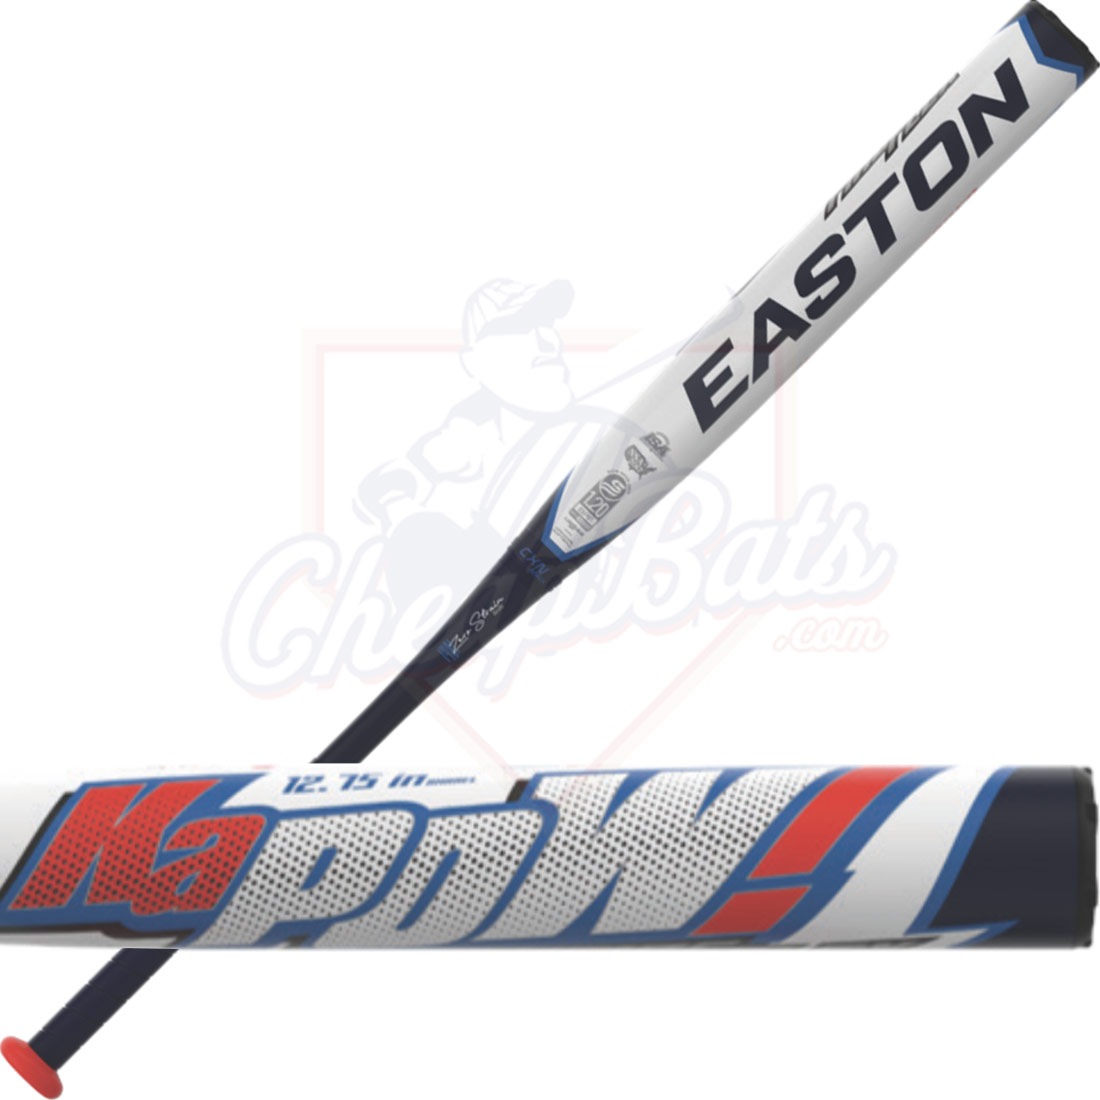 2022 Easton Comic Kapow Slowpitch Softball Bat Loaded USSSA SP22KPWL